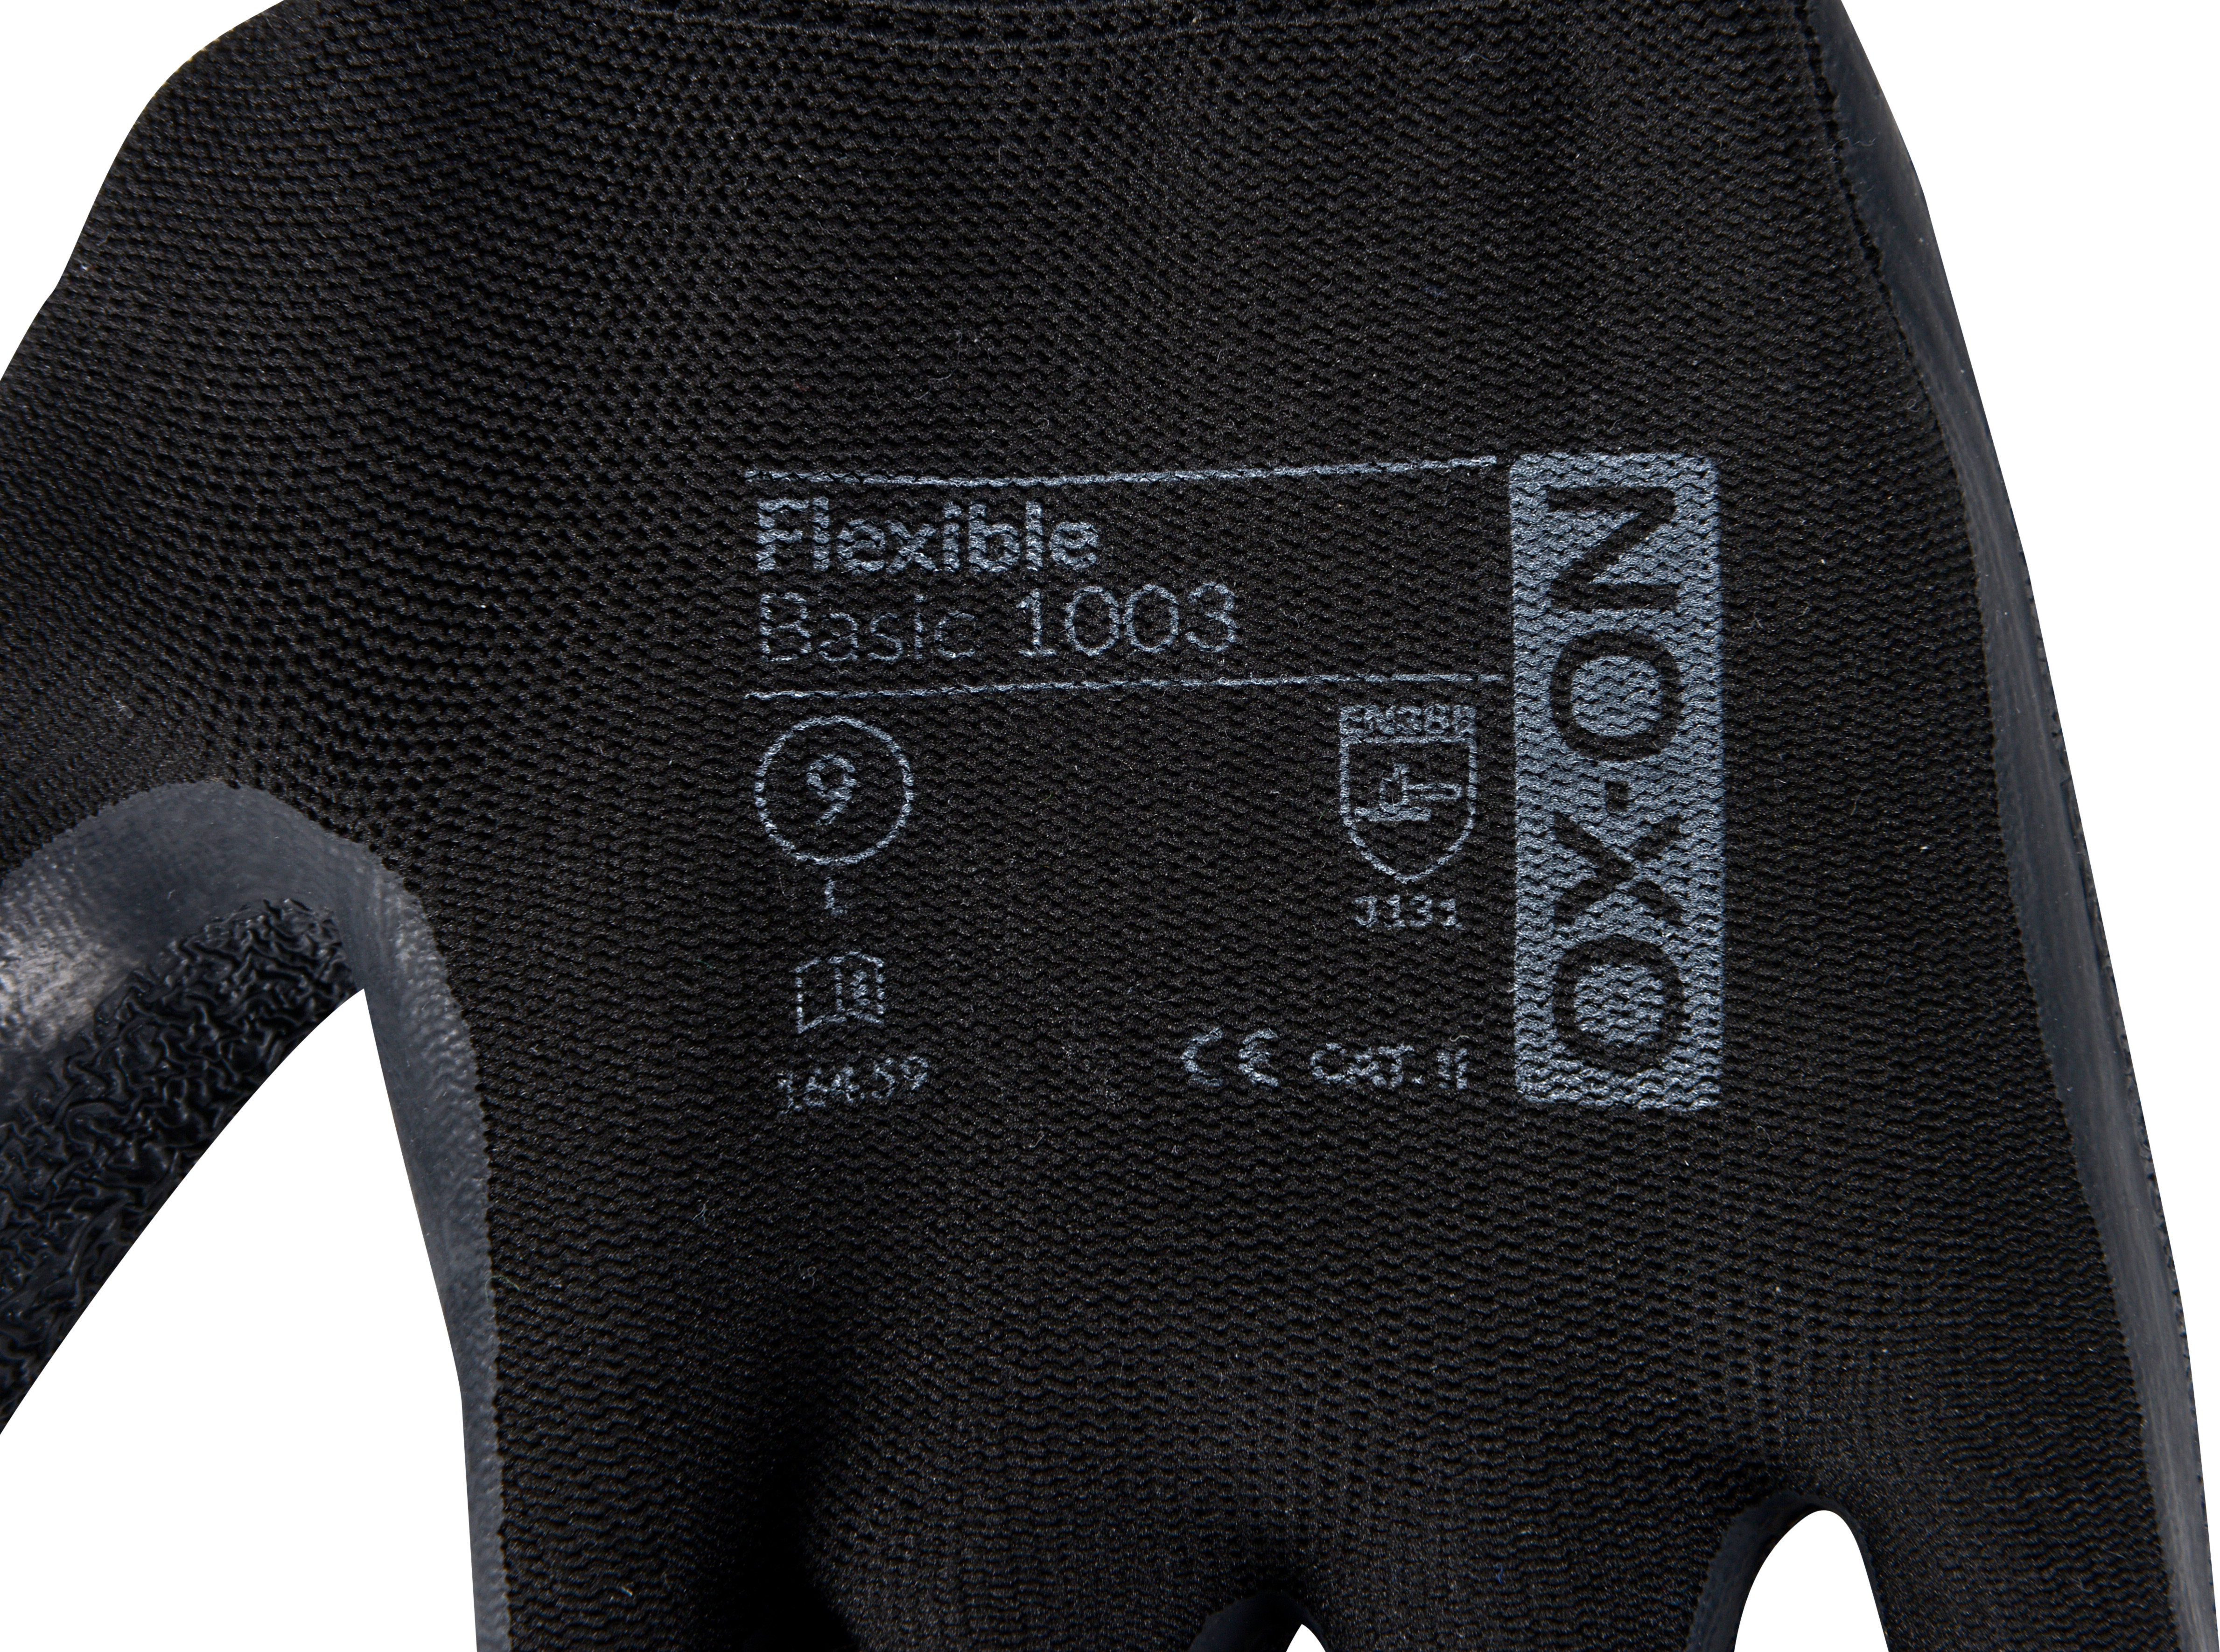 OX-ON Flexible Basic 1003 Montagehandschuh, Gr. 9